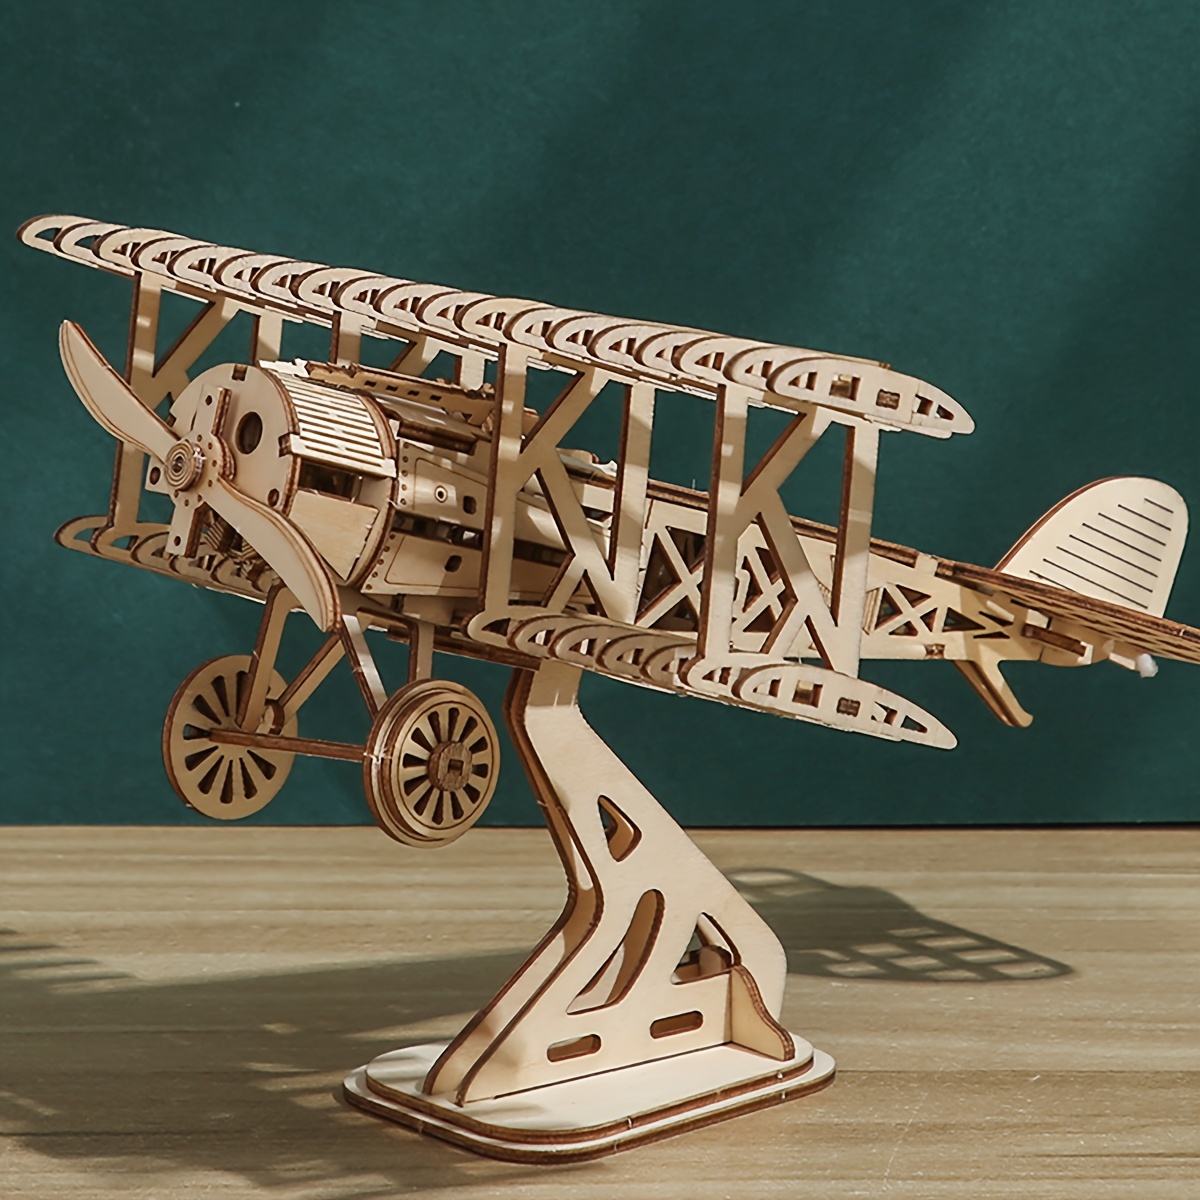 

3d Wooden Puzzle Wood Diy Craft Bi-plane Model Kits Handmade Gifts